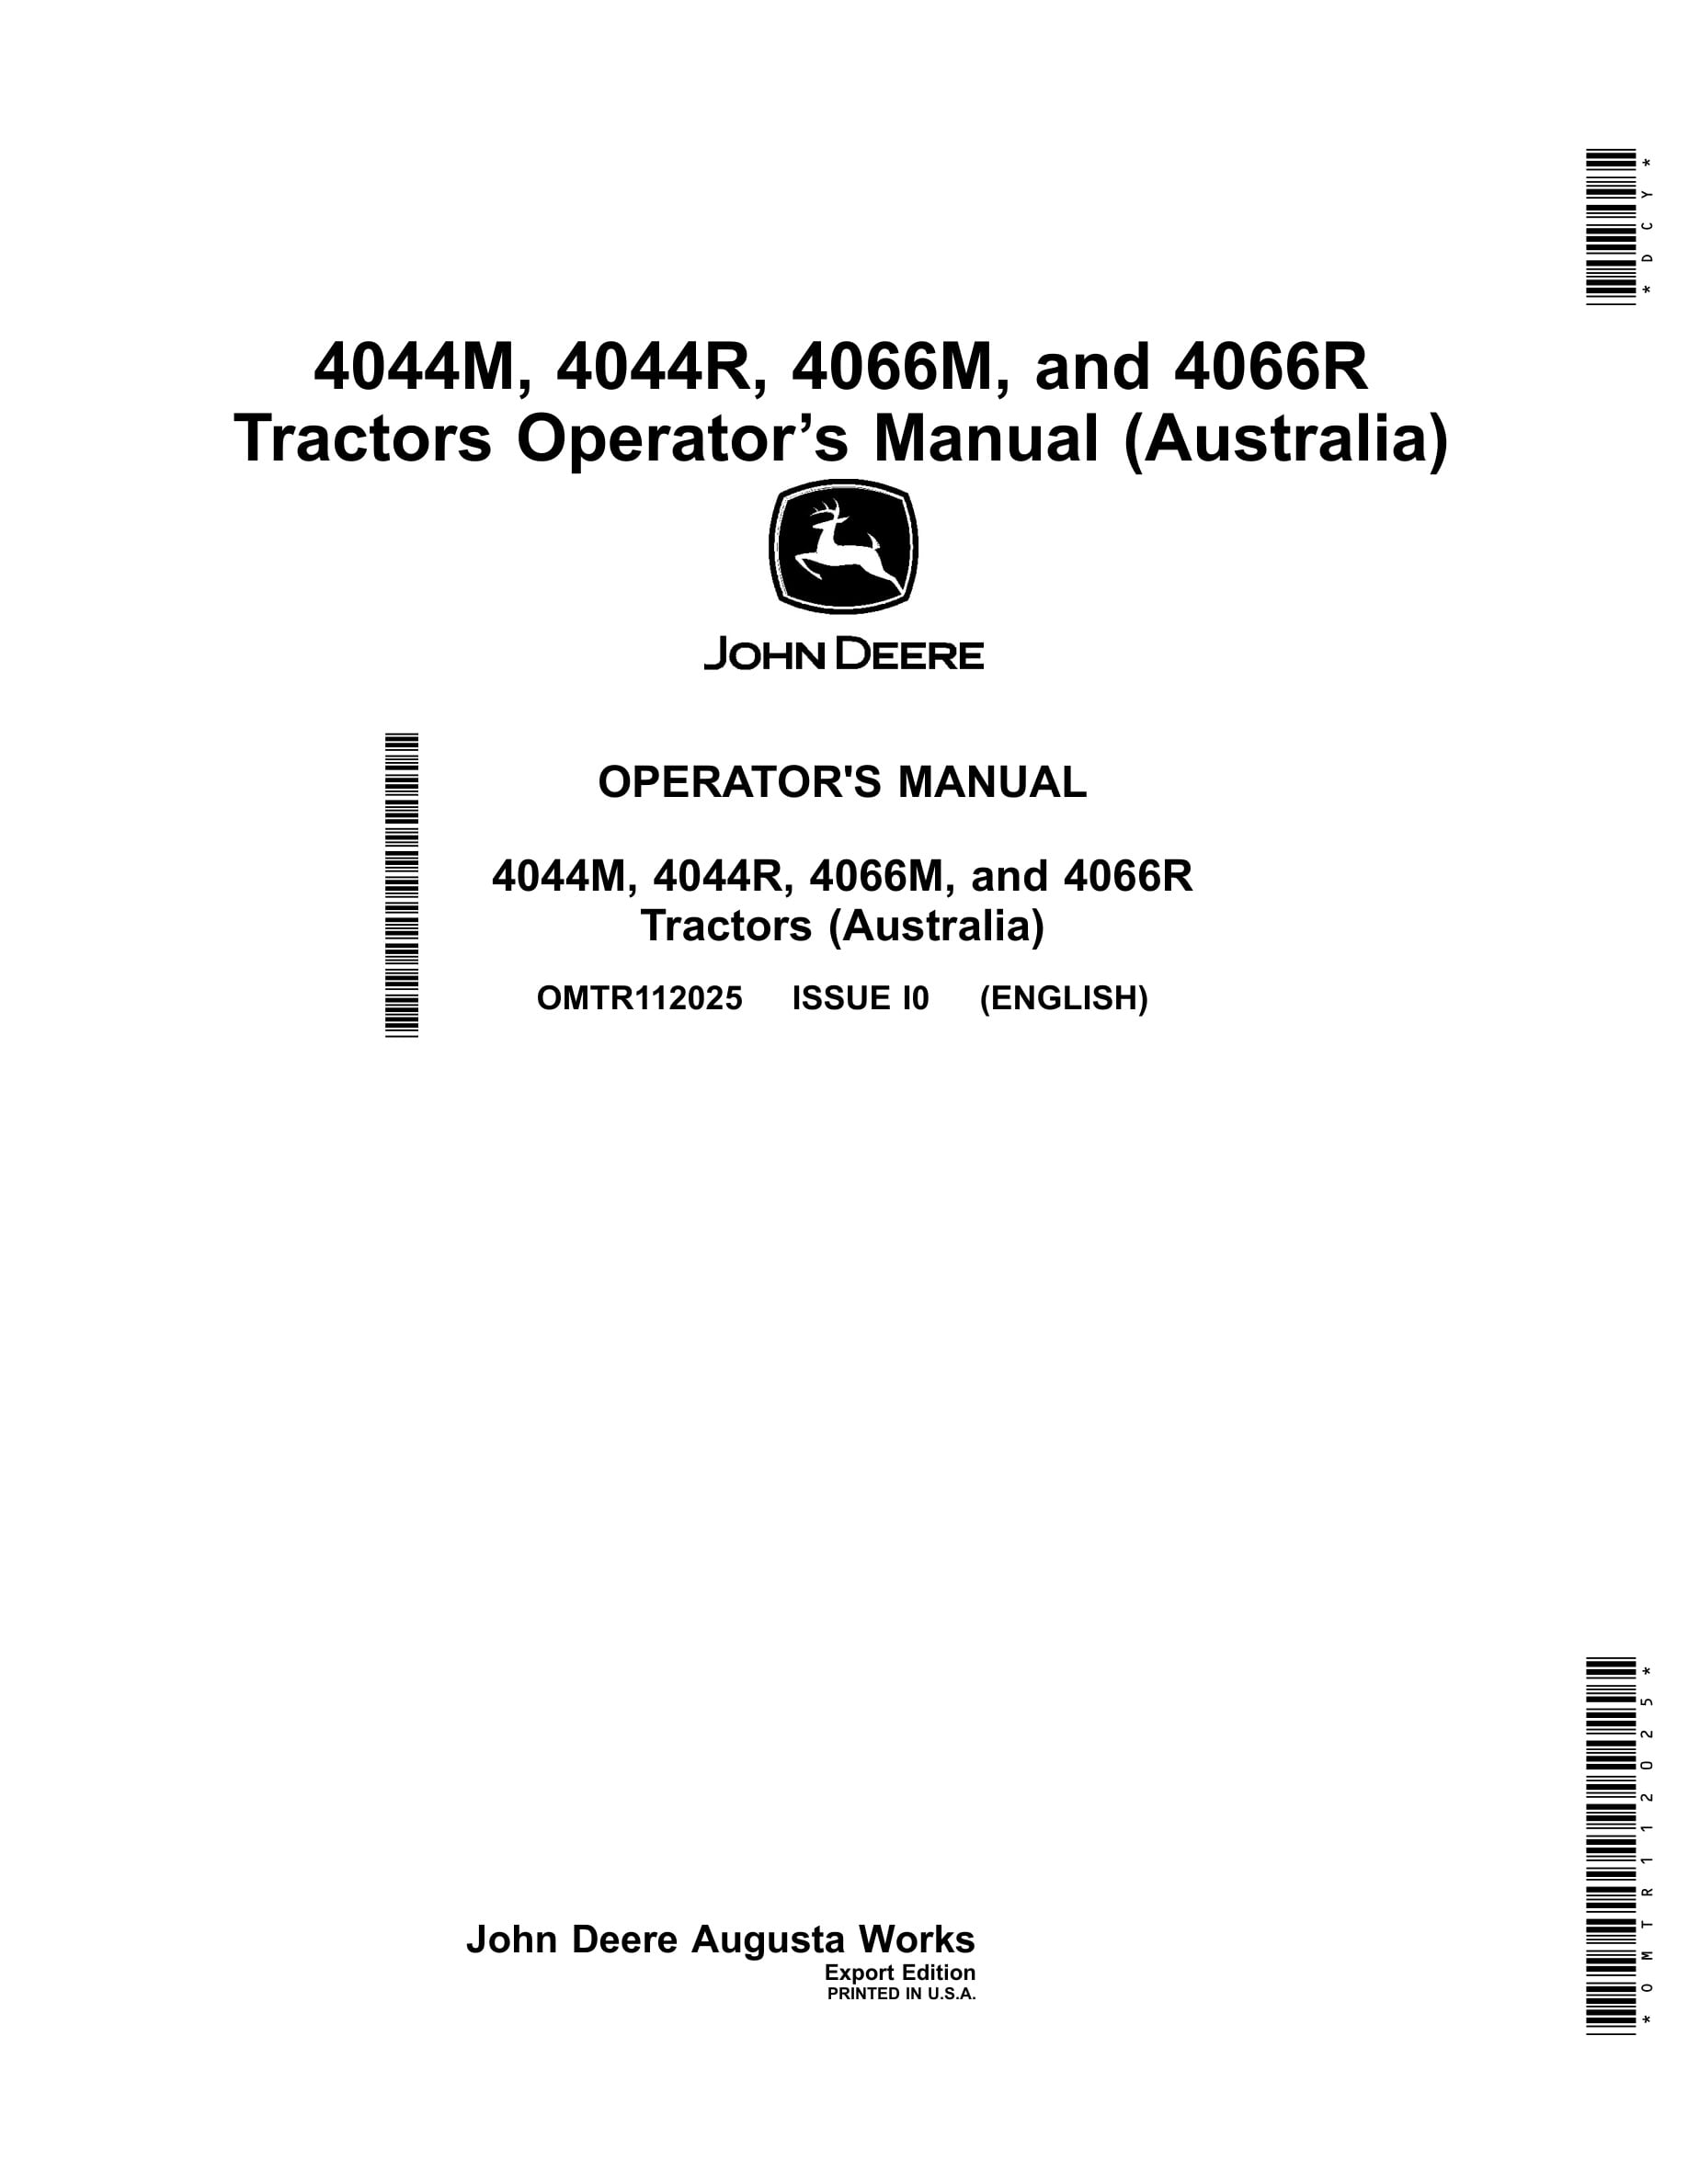 John Deere 4044m, 4044r, 4066m, And 4066r Tractors Operator Manuals OMTR112025-1